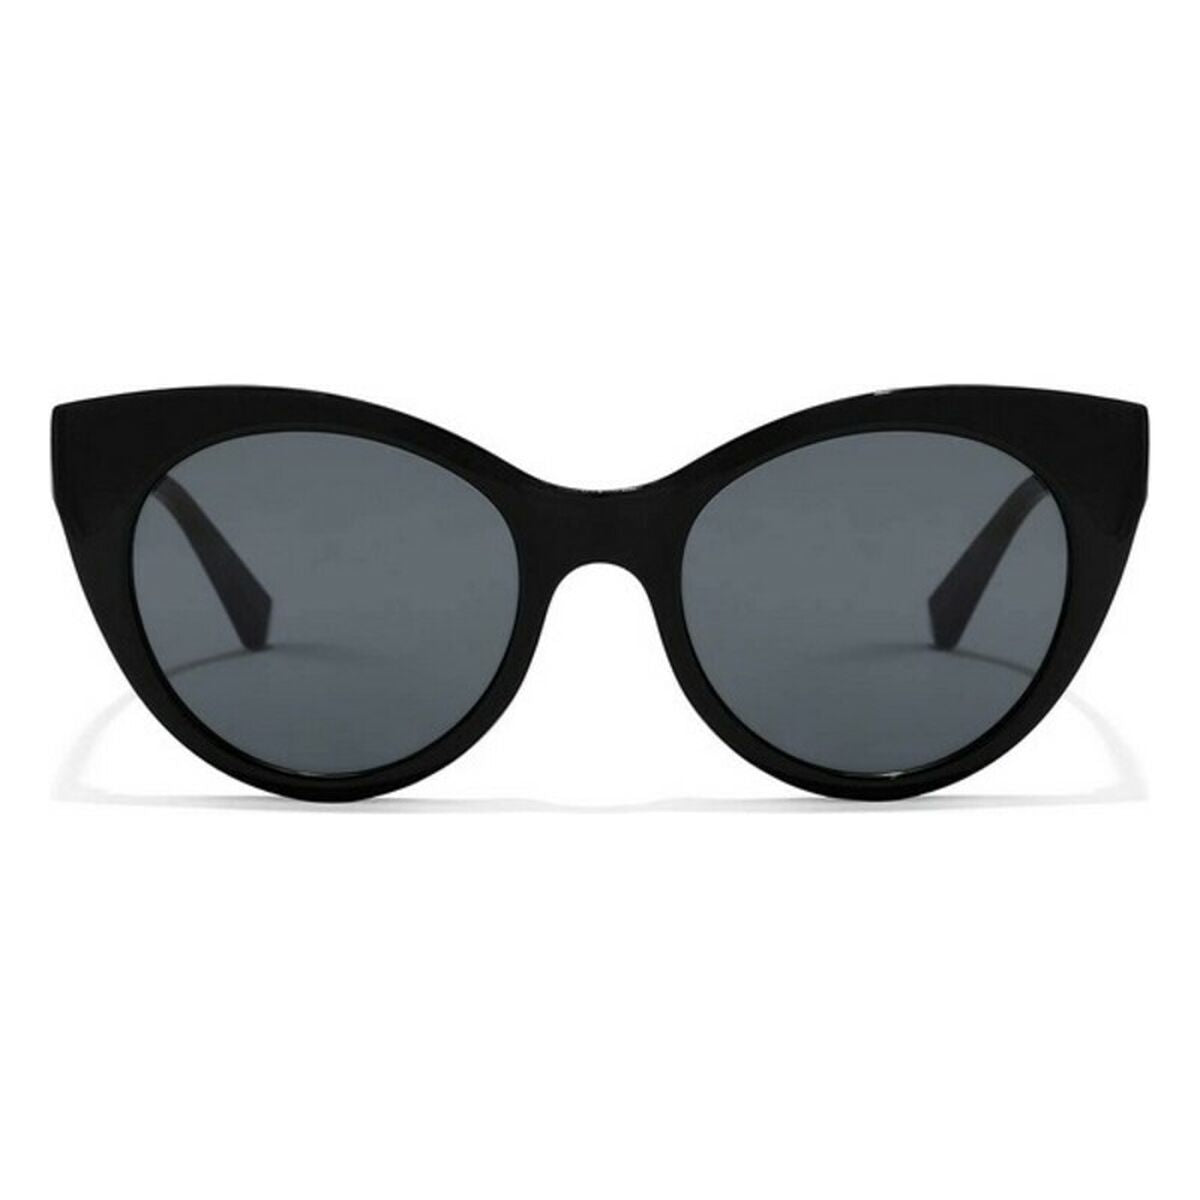 Ladies'Sunglasses Divine Hawkers (ø 50 mm)